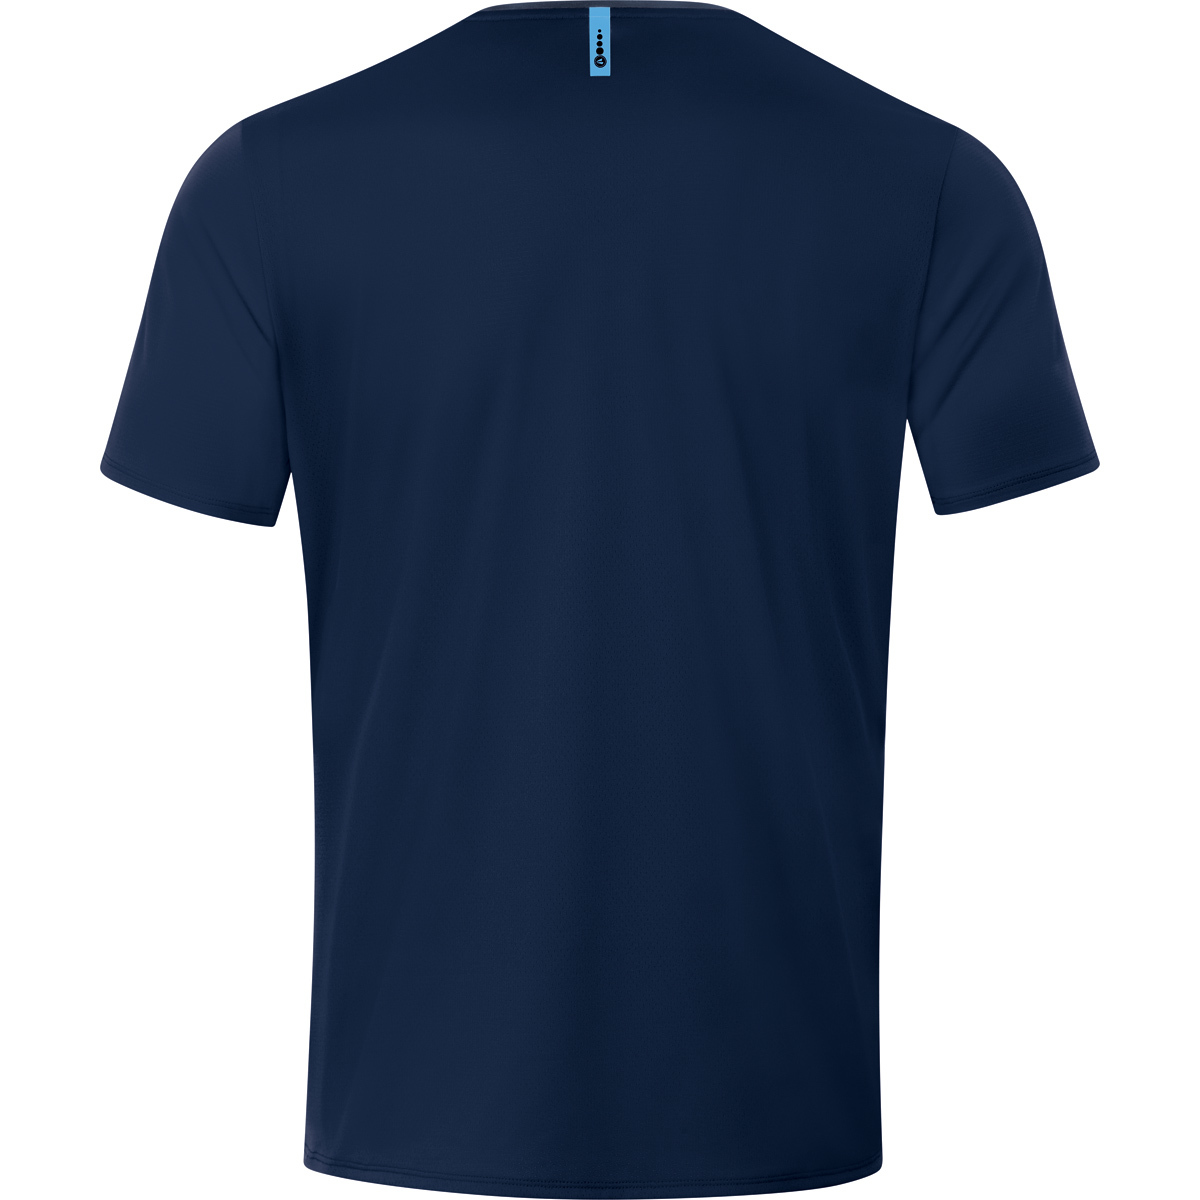 JAKO T-Shirt S, marine/darkblue/skyblue, 6120 Gr. Herren, 2.0 Champ